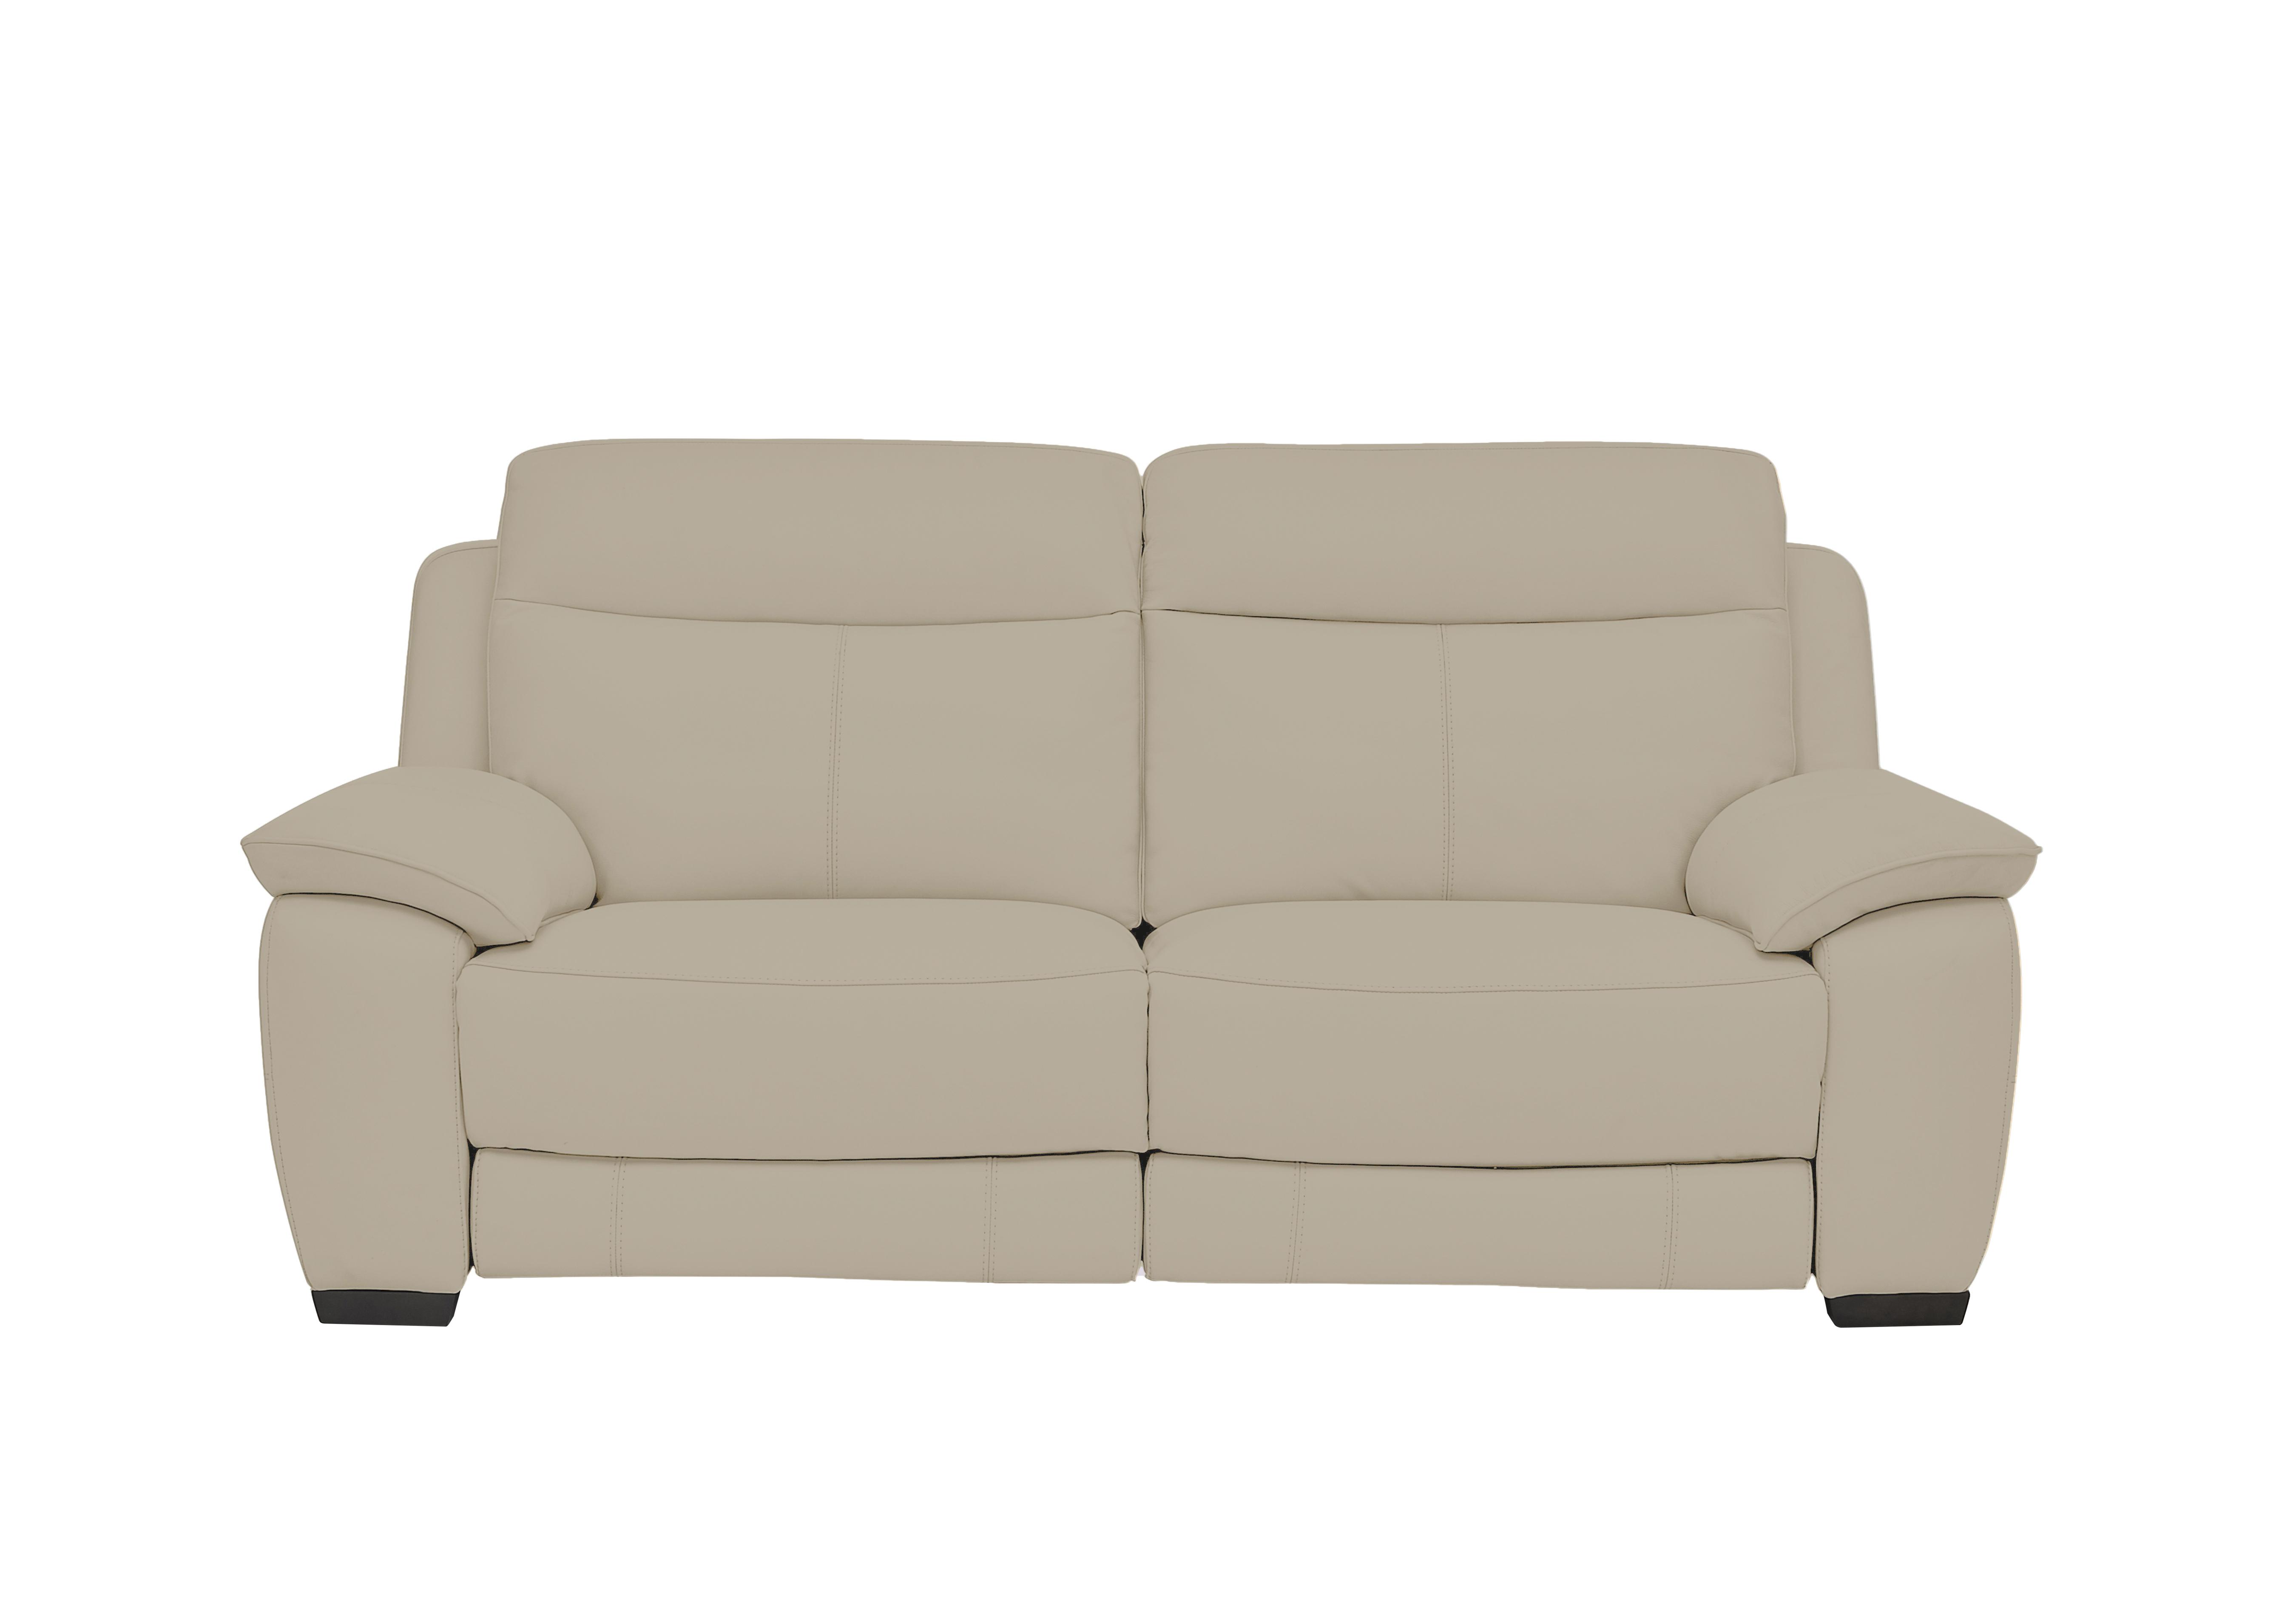 Starlight Express 3 Seater Leather Sofa in Bv-041e Dapple Grey on Furniture Village